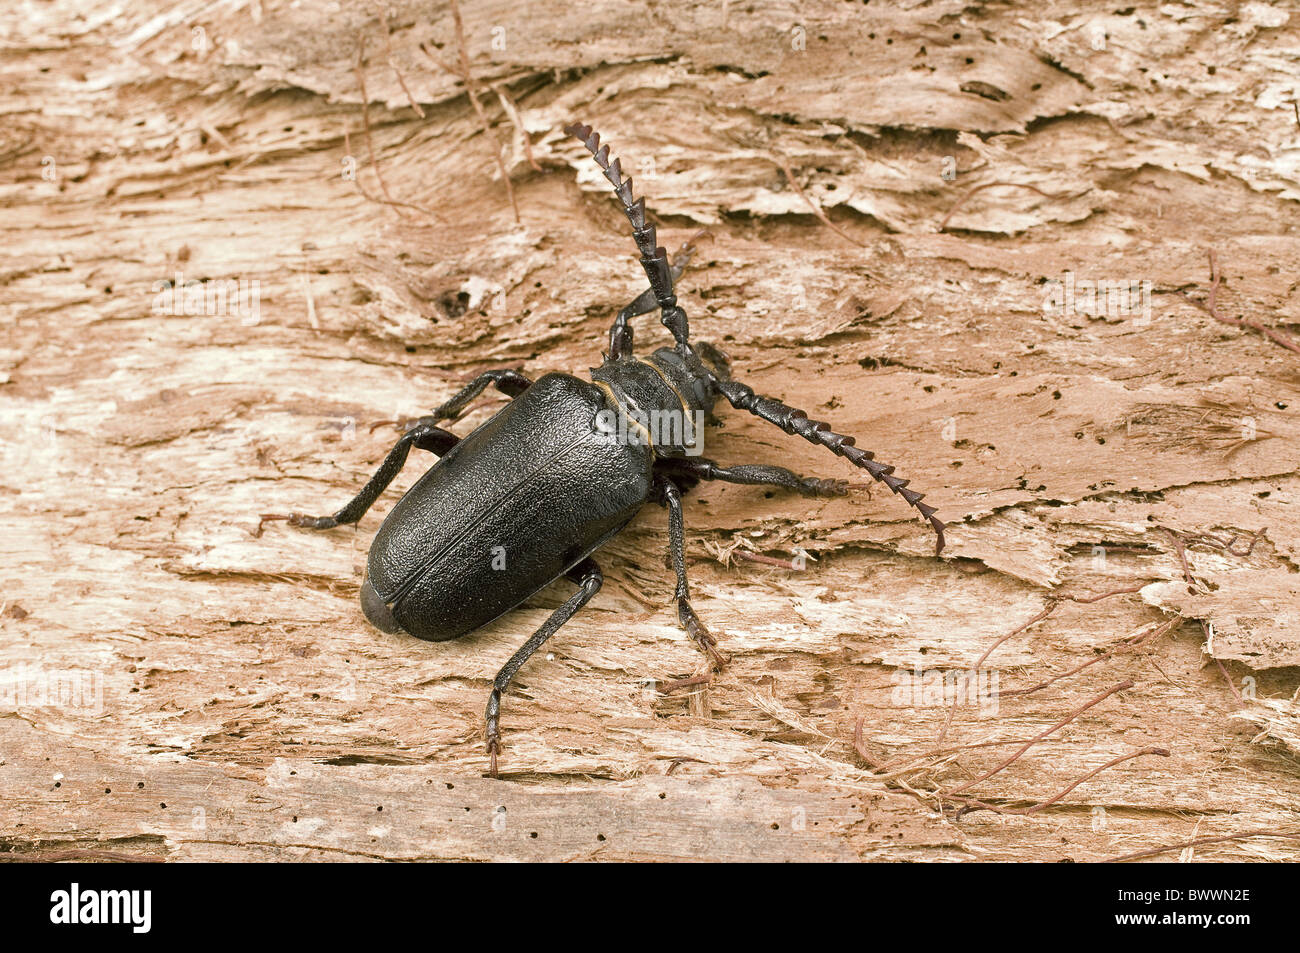 invertebrate invertebrates animal animals insect insects beetle beetles arthropod arthropods longhorn longhorns europe european Stock Photo